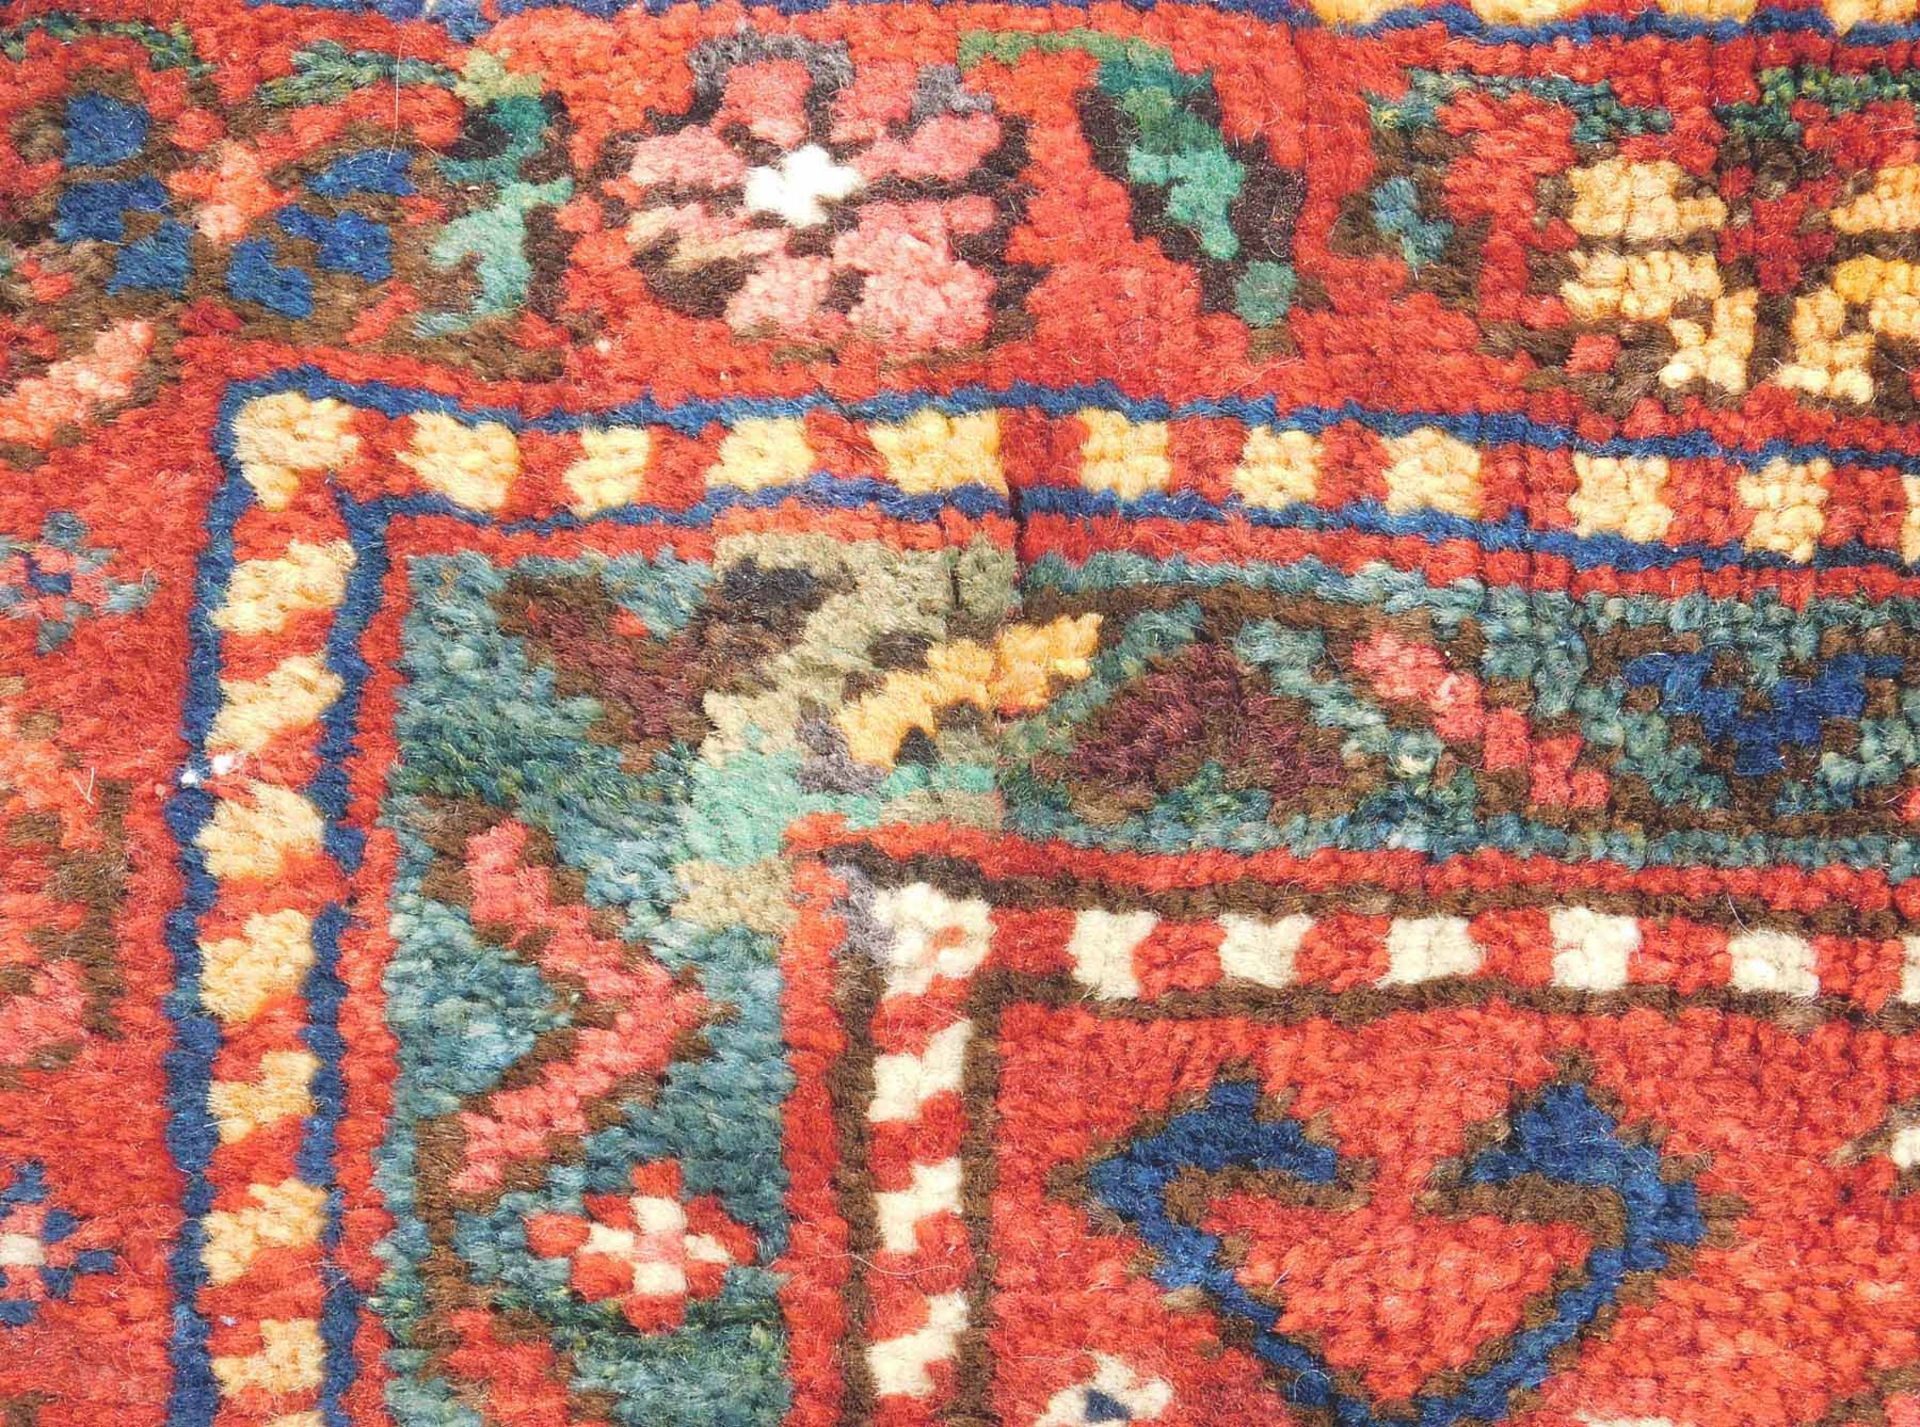 Shah - Savan Persian rug. Pocket front. Iran. Antique, around 1900.94 cm x 132 cm. One side hand- - Image 6 of 7